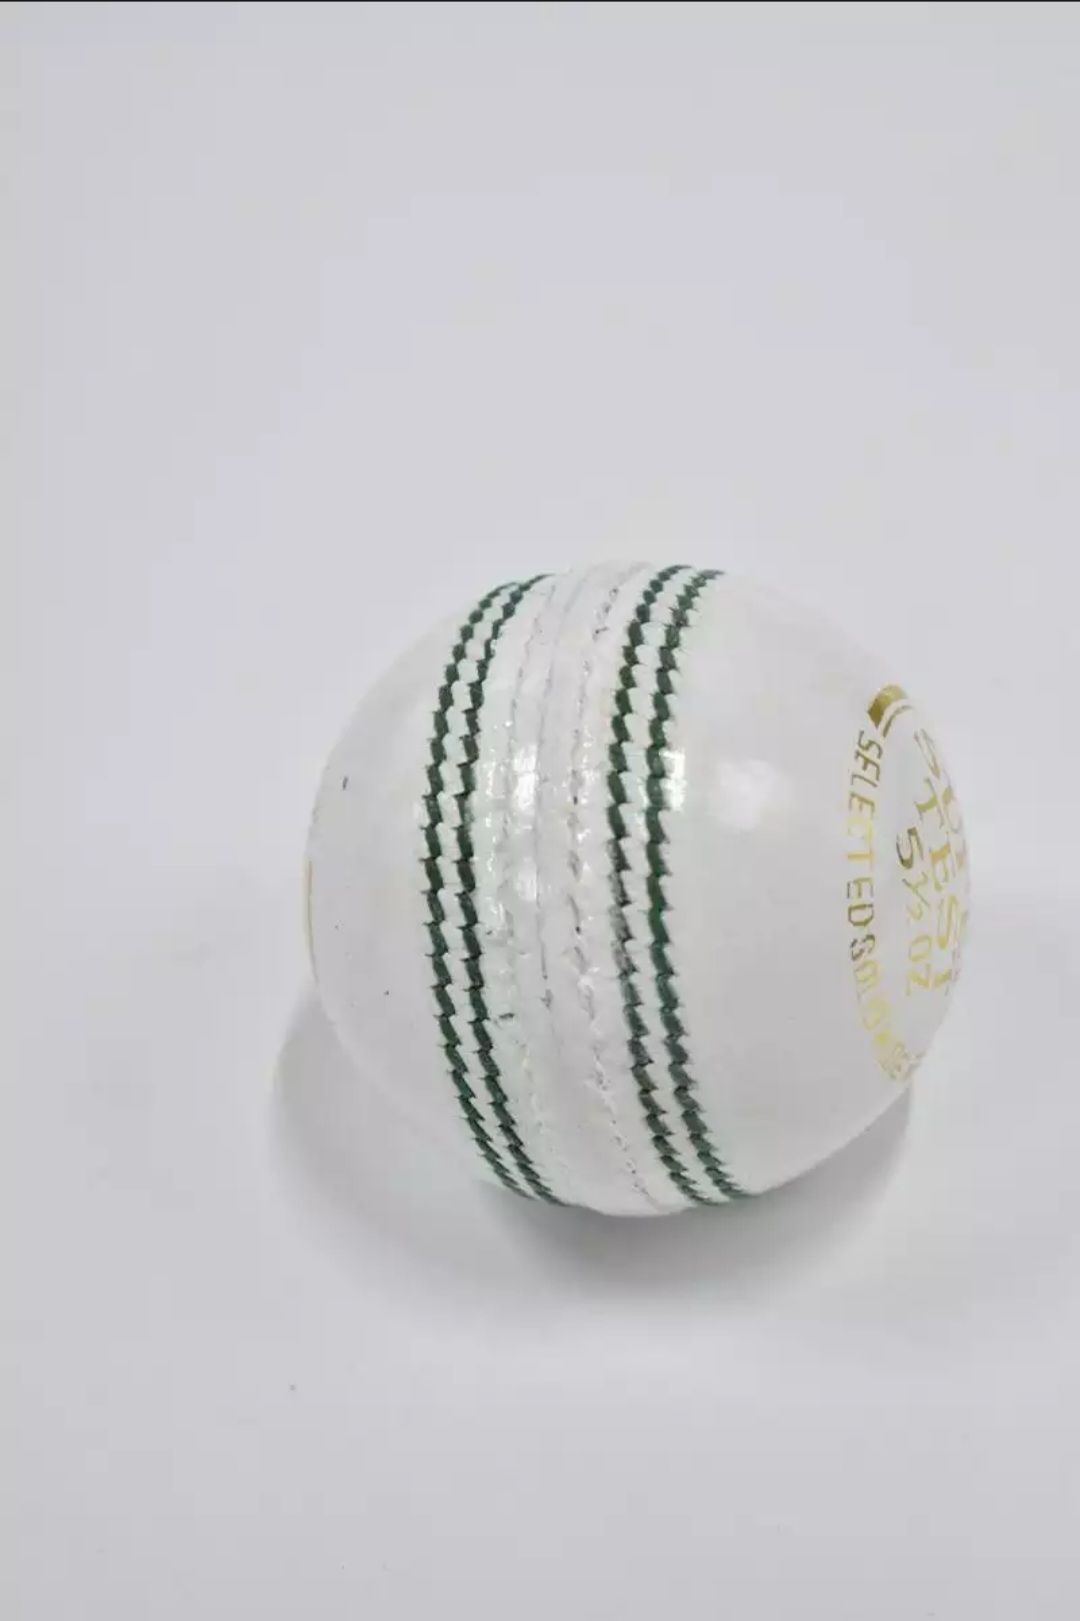 Cricket Hard ball 1 piece Buy Online at Best Prices in Pakistan Daraz.pk